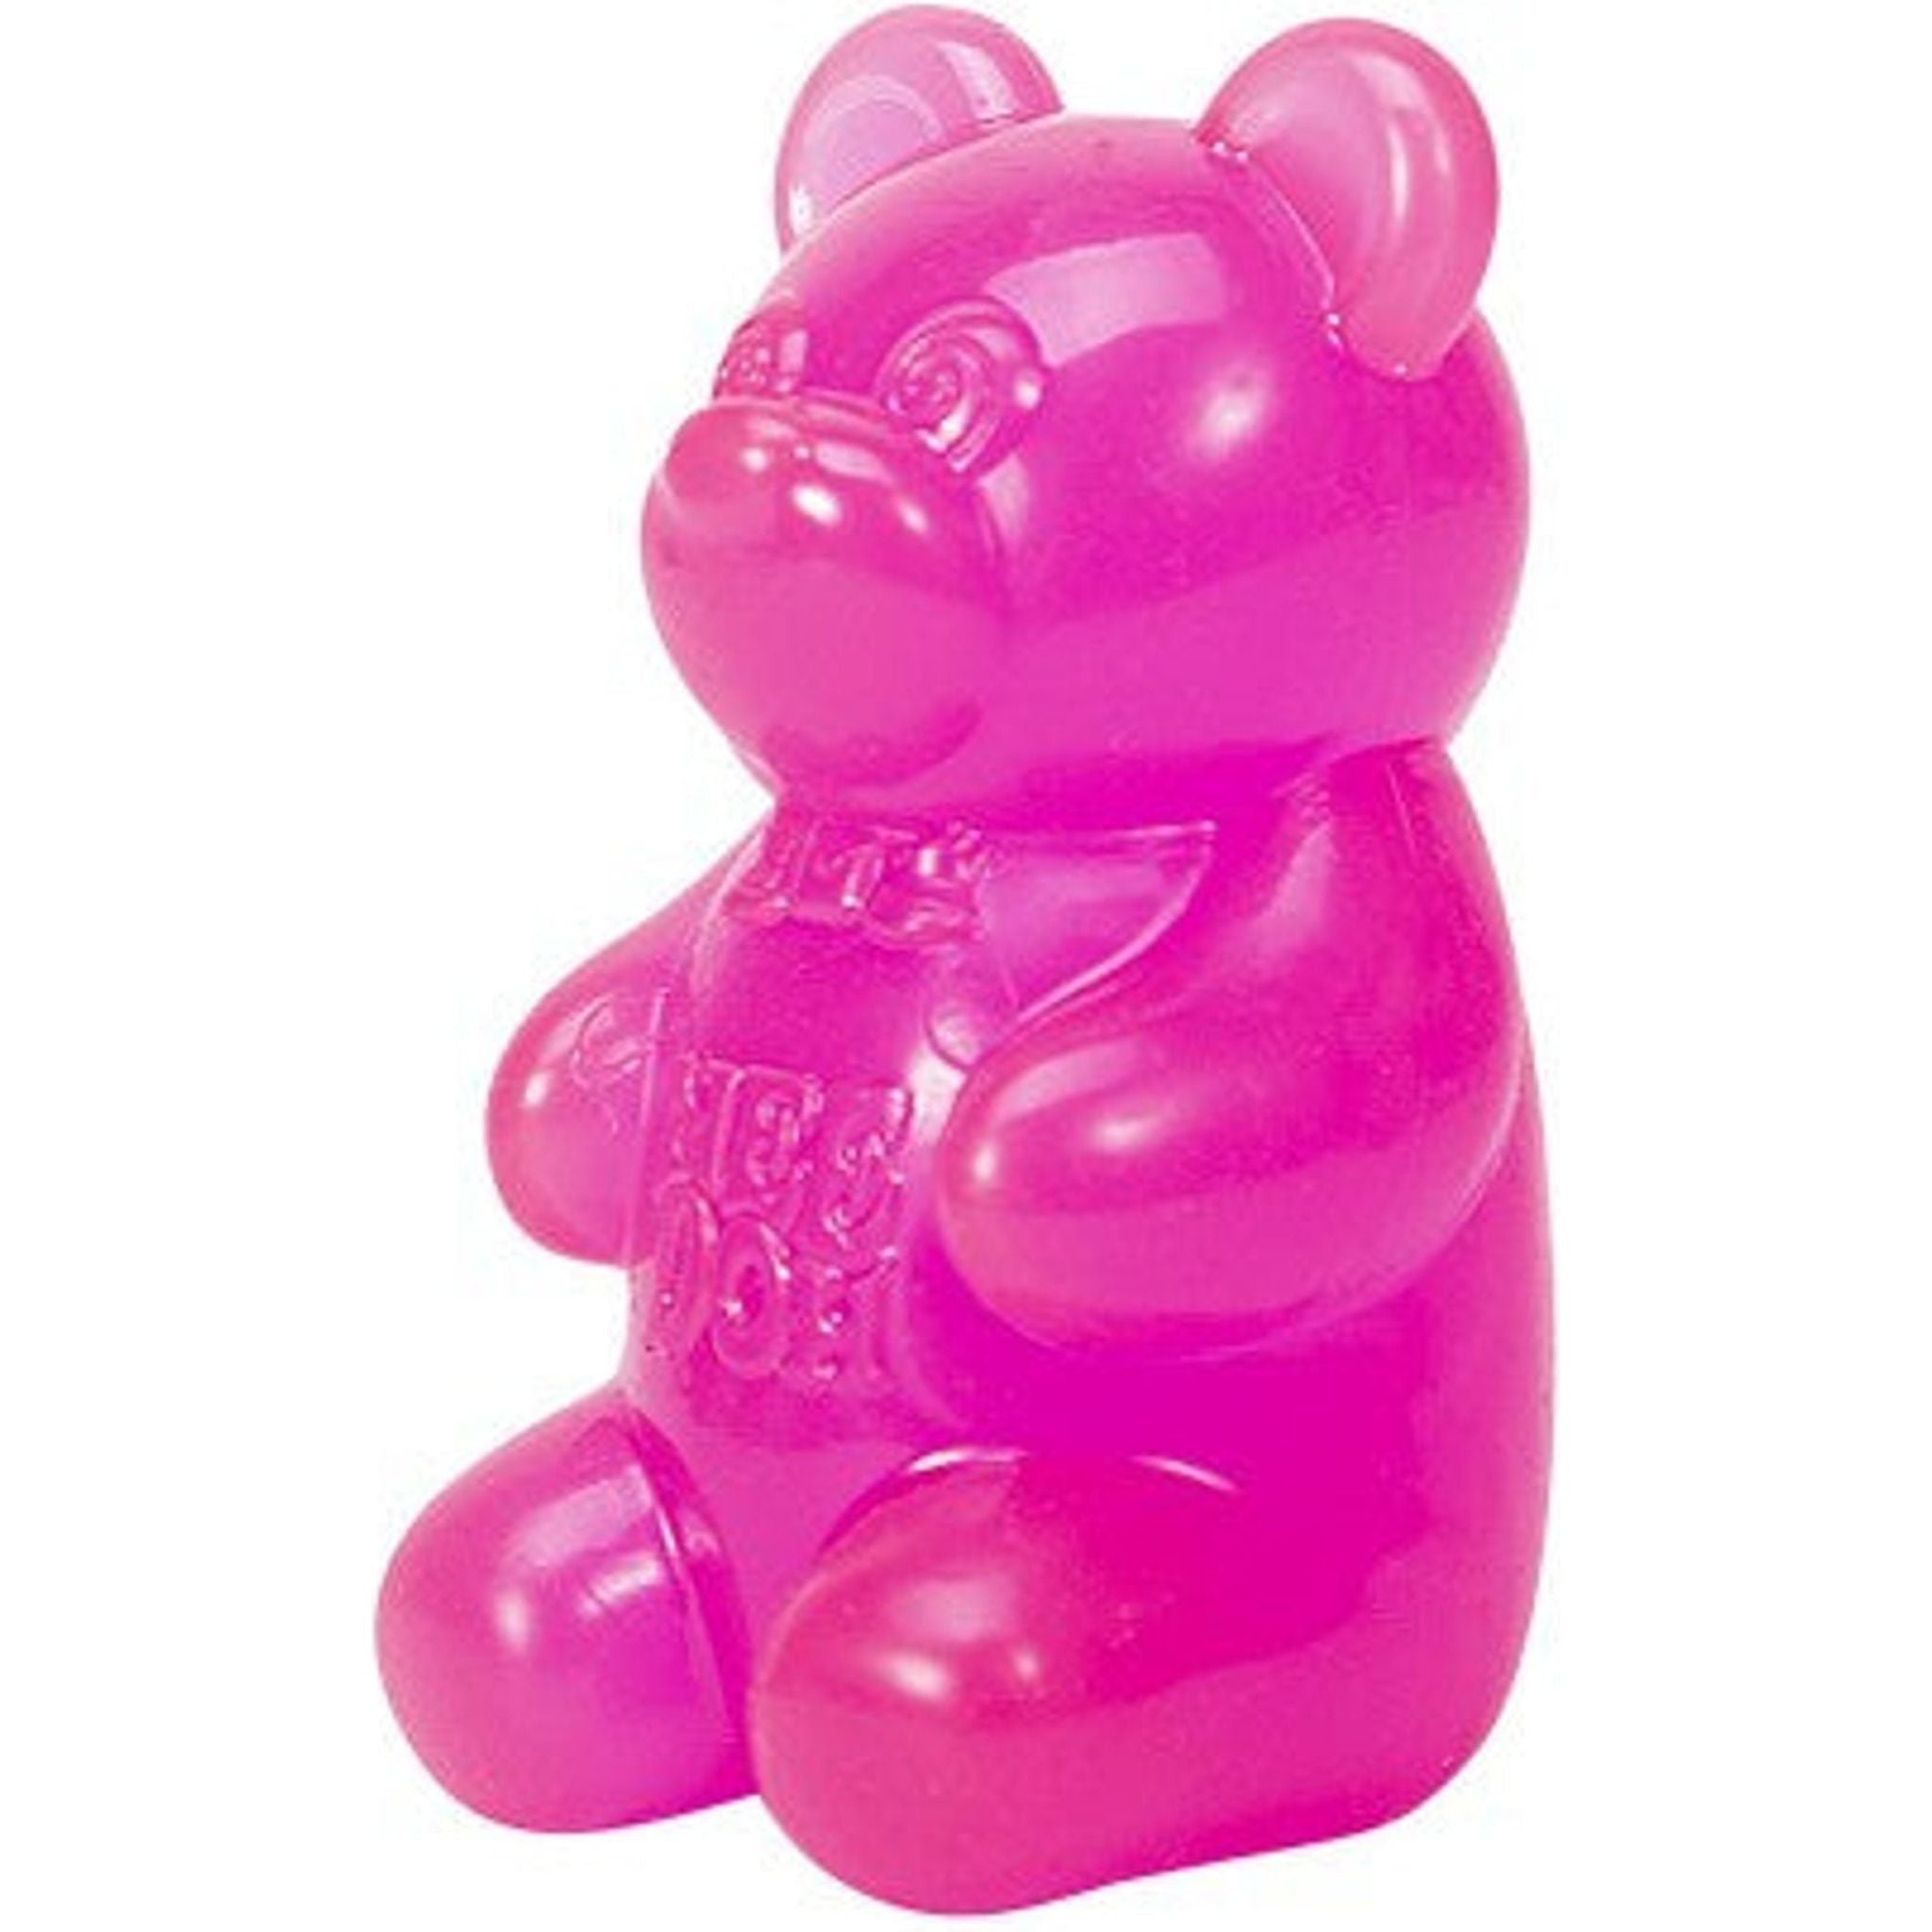 Nee Doh - Gummy Bear - Toybox Tales